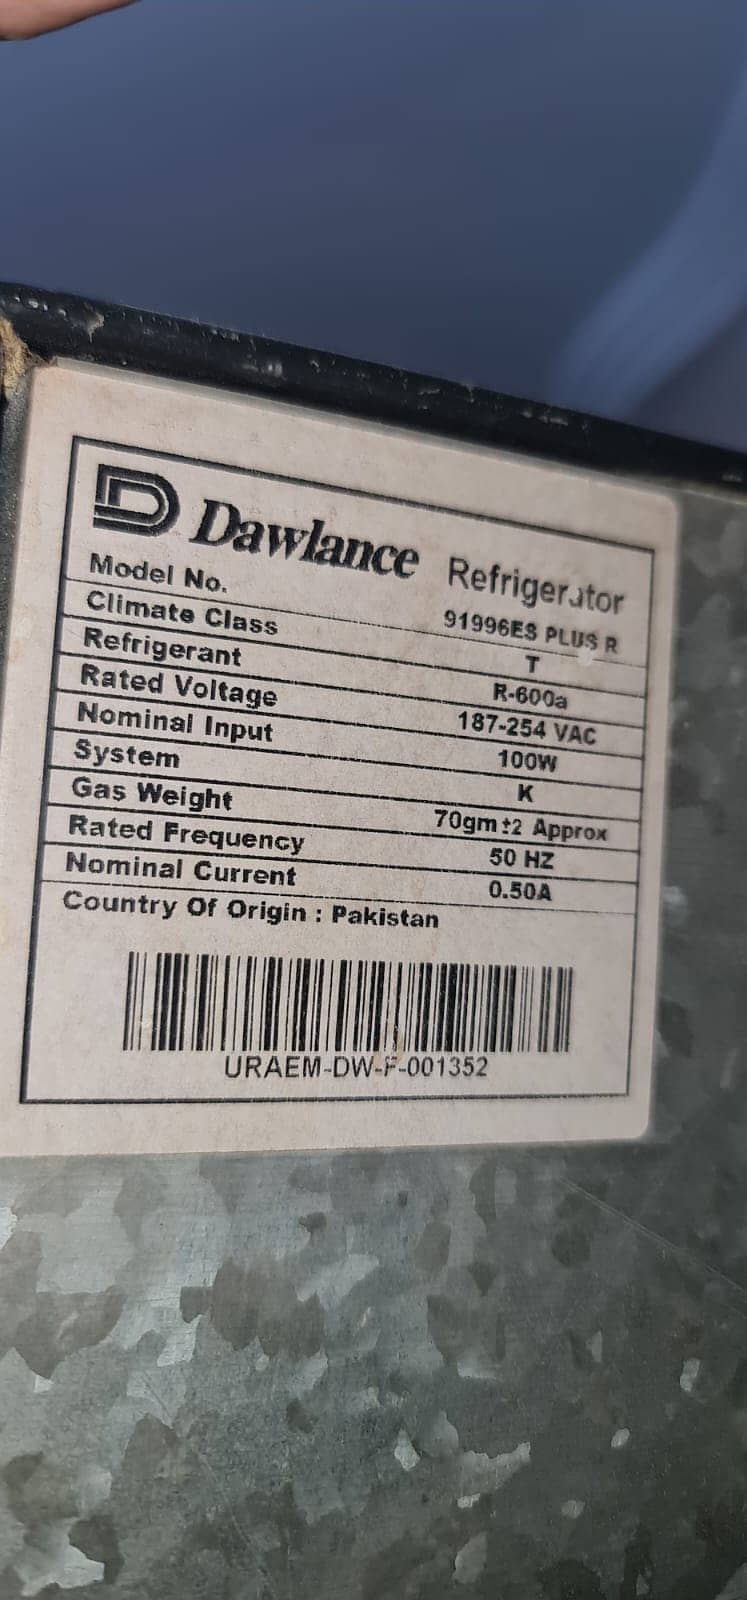 Dawlance 91996 ES PLUS 18cft Refrigerator 5